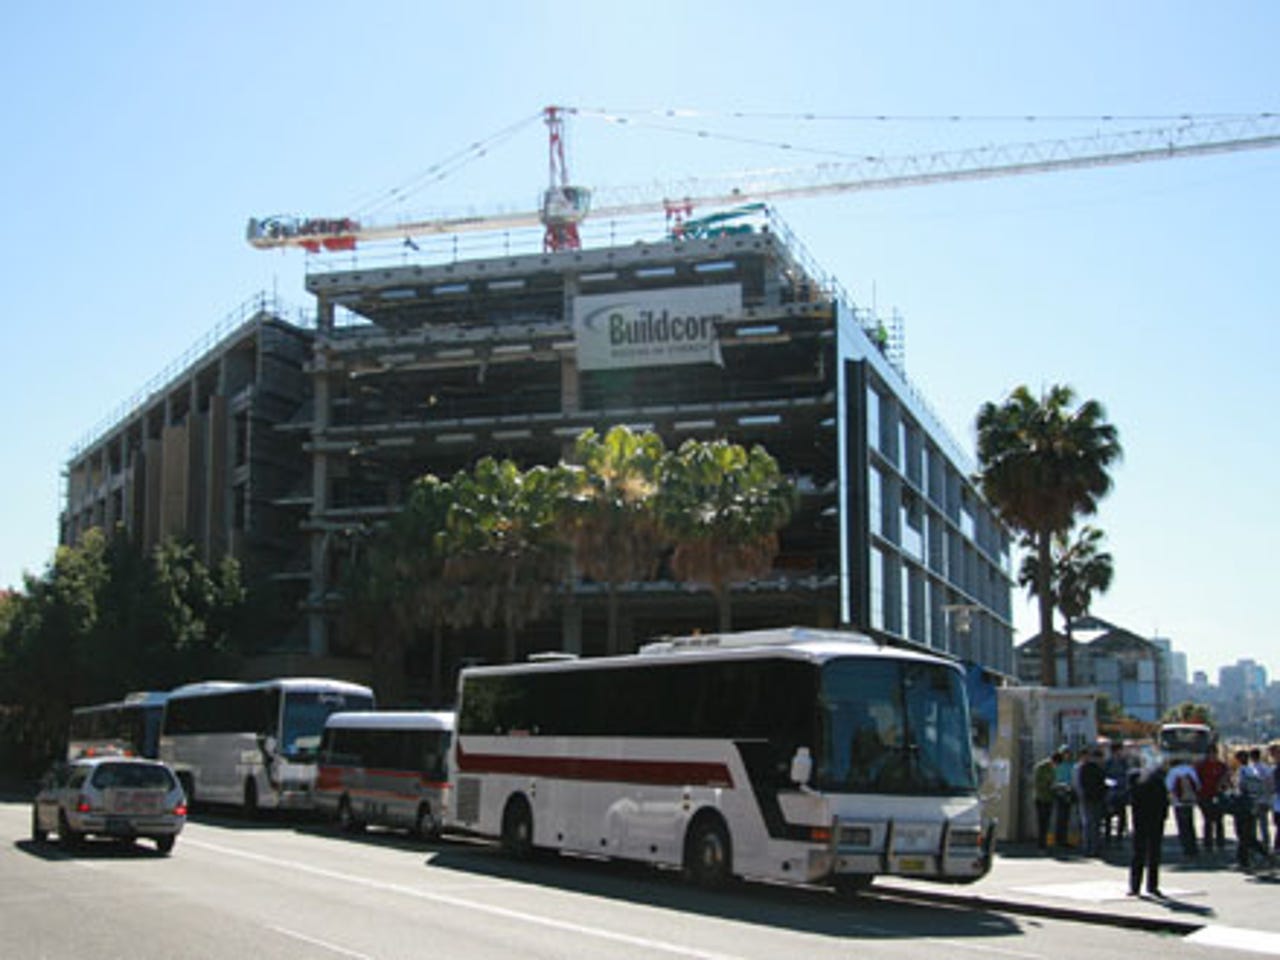 photos-sydney-googleplex-under-construction1.jpg